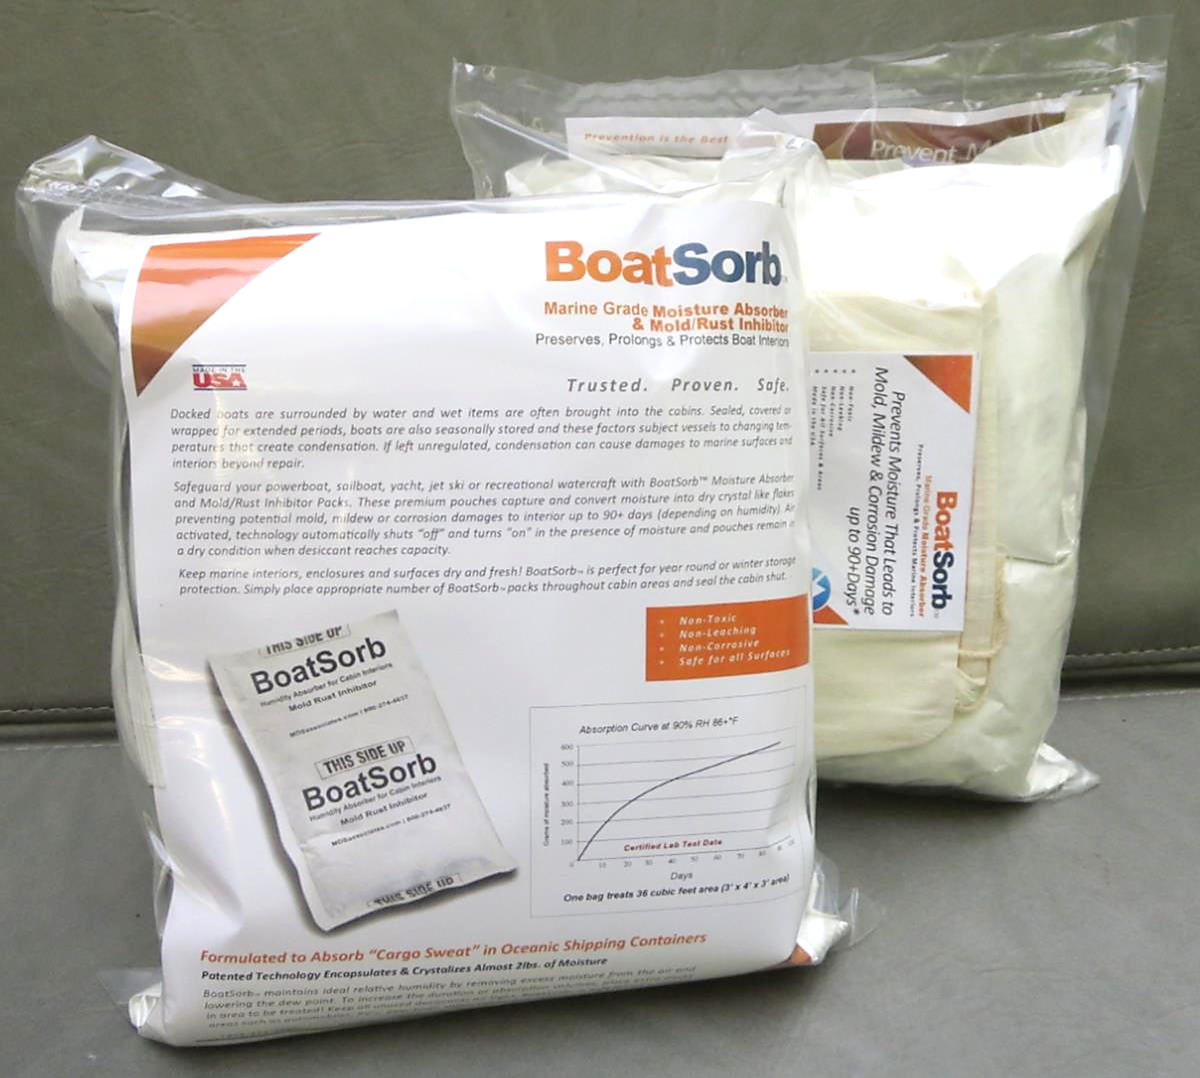 BoatSorb™ Marine-Grade Moisture Absorber and Mold/Rust Inhibitor Packs